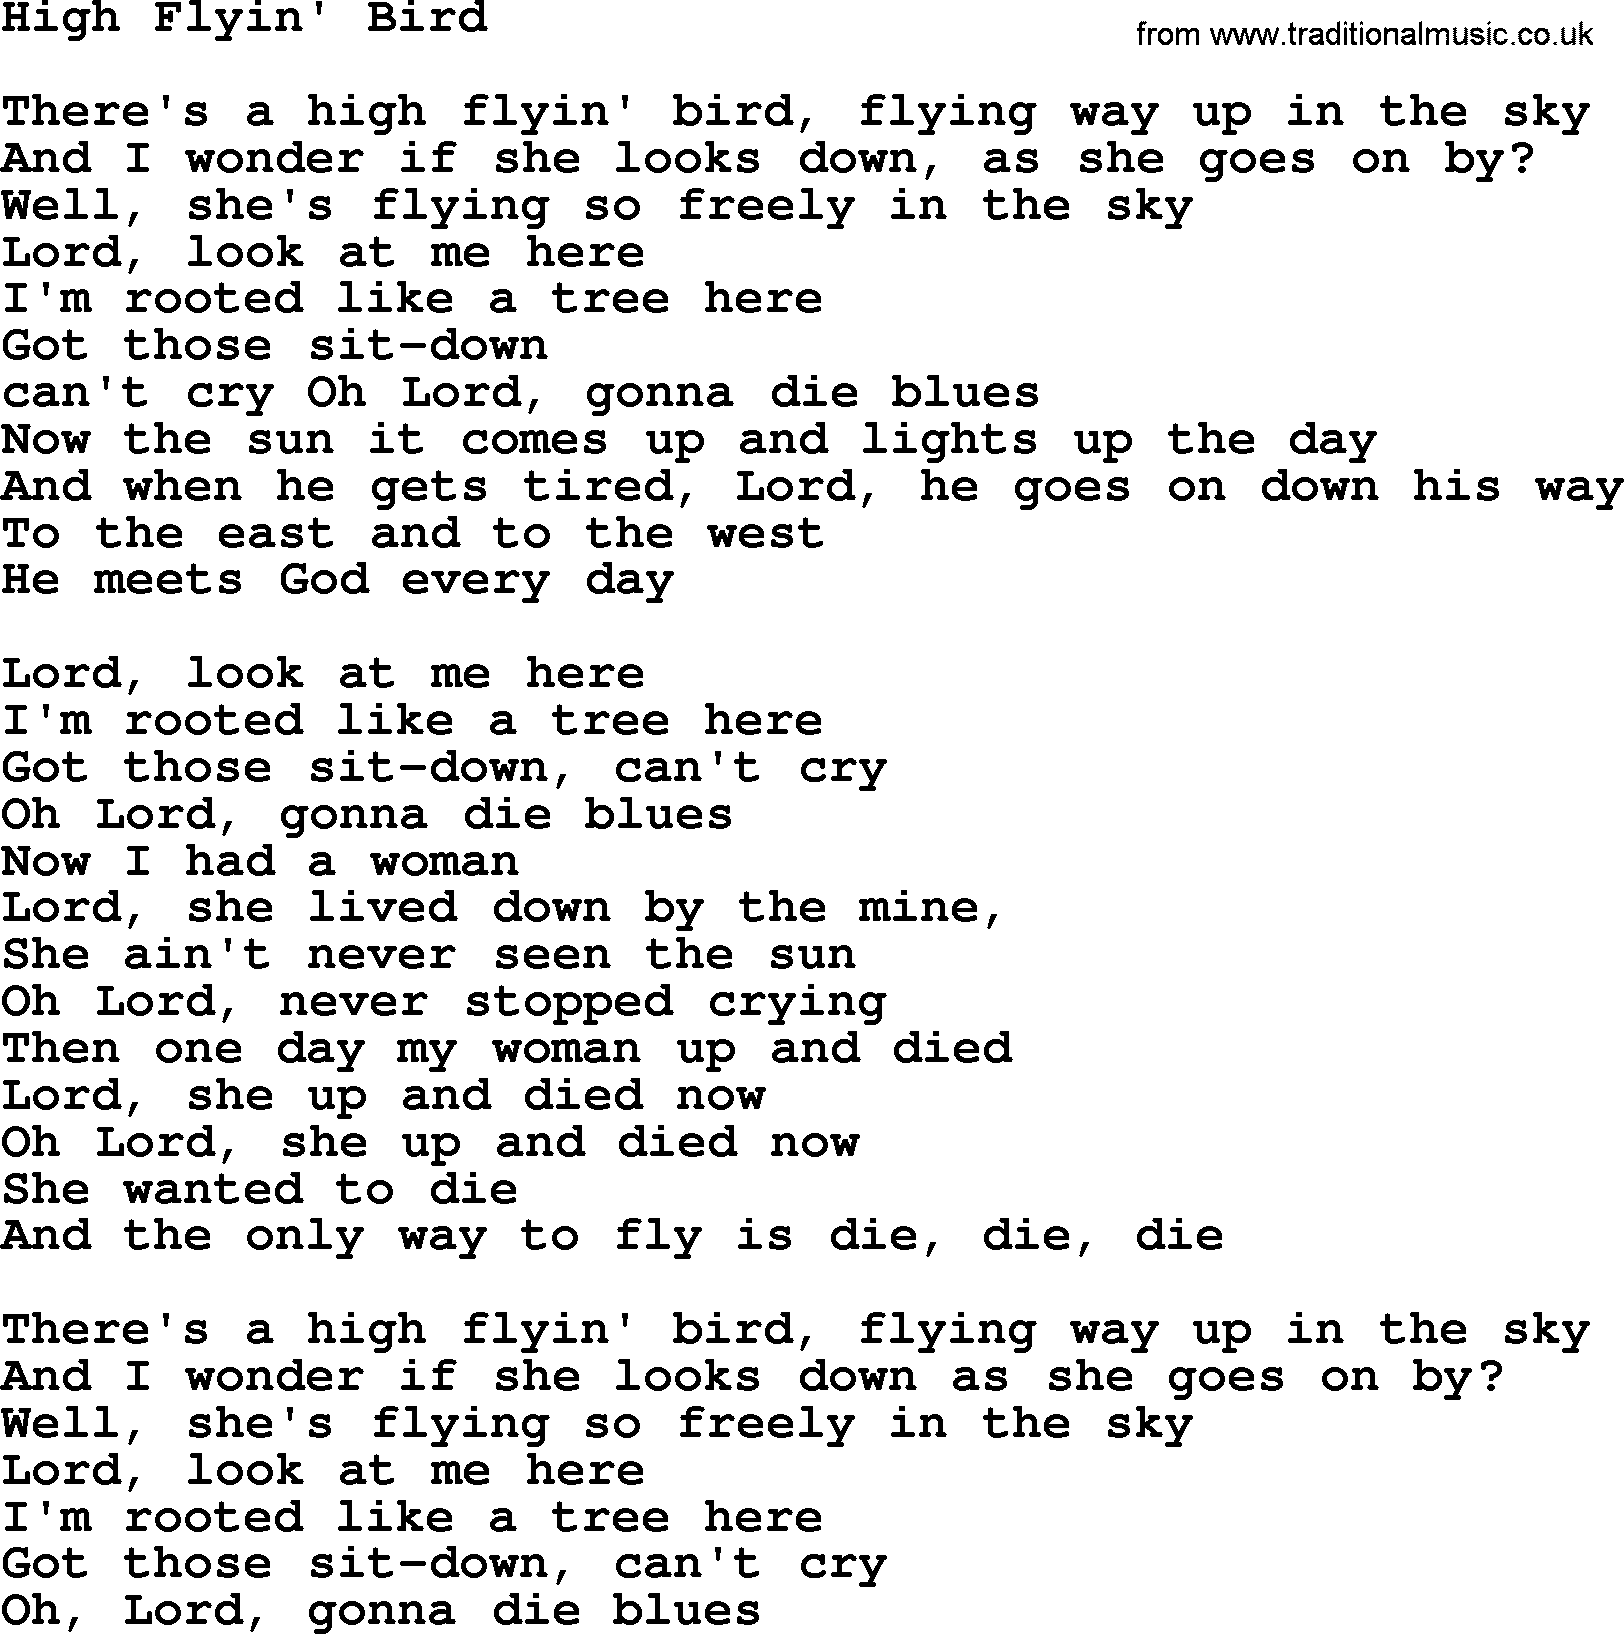 The Byrds song High Flyin' Bird, lyrics